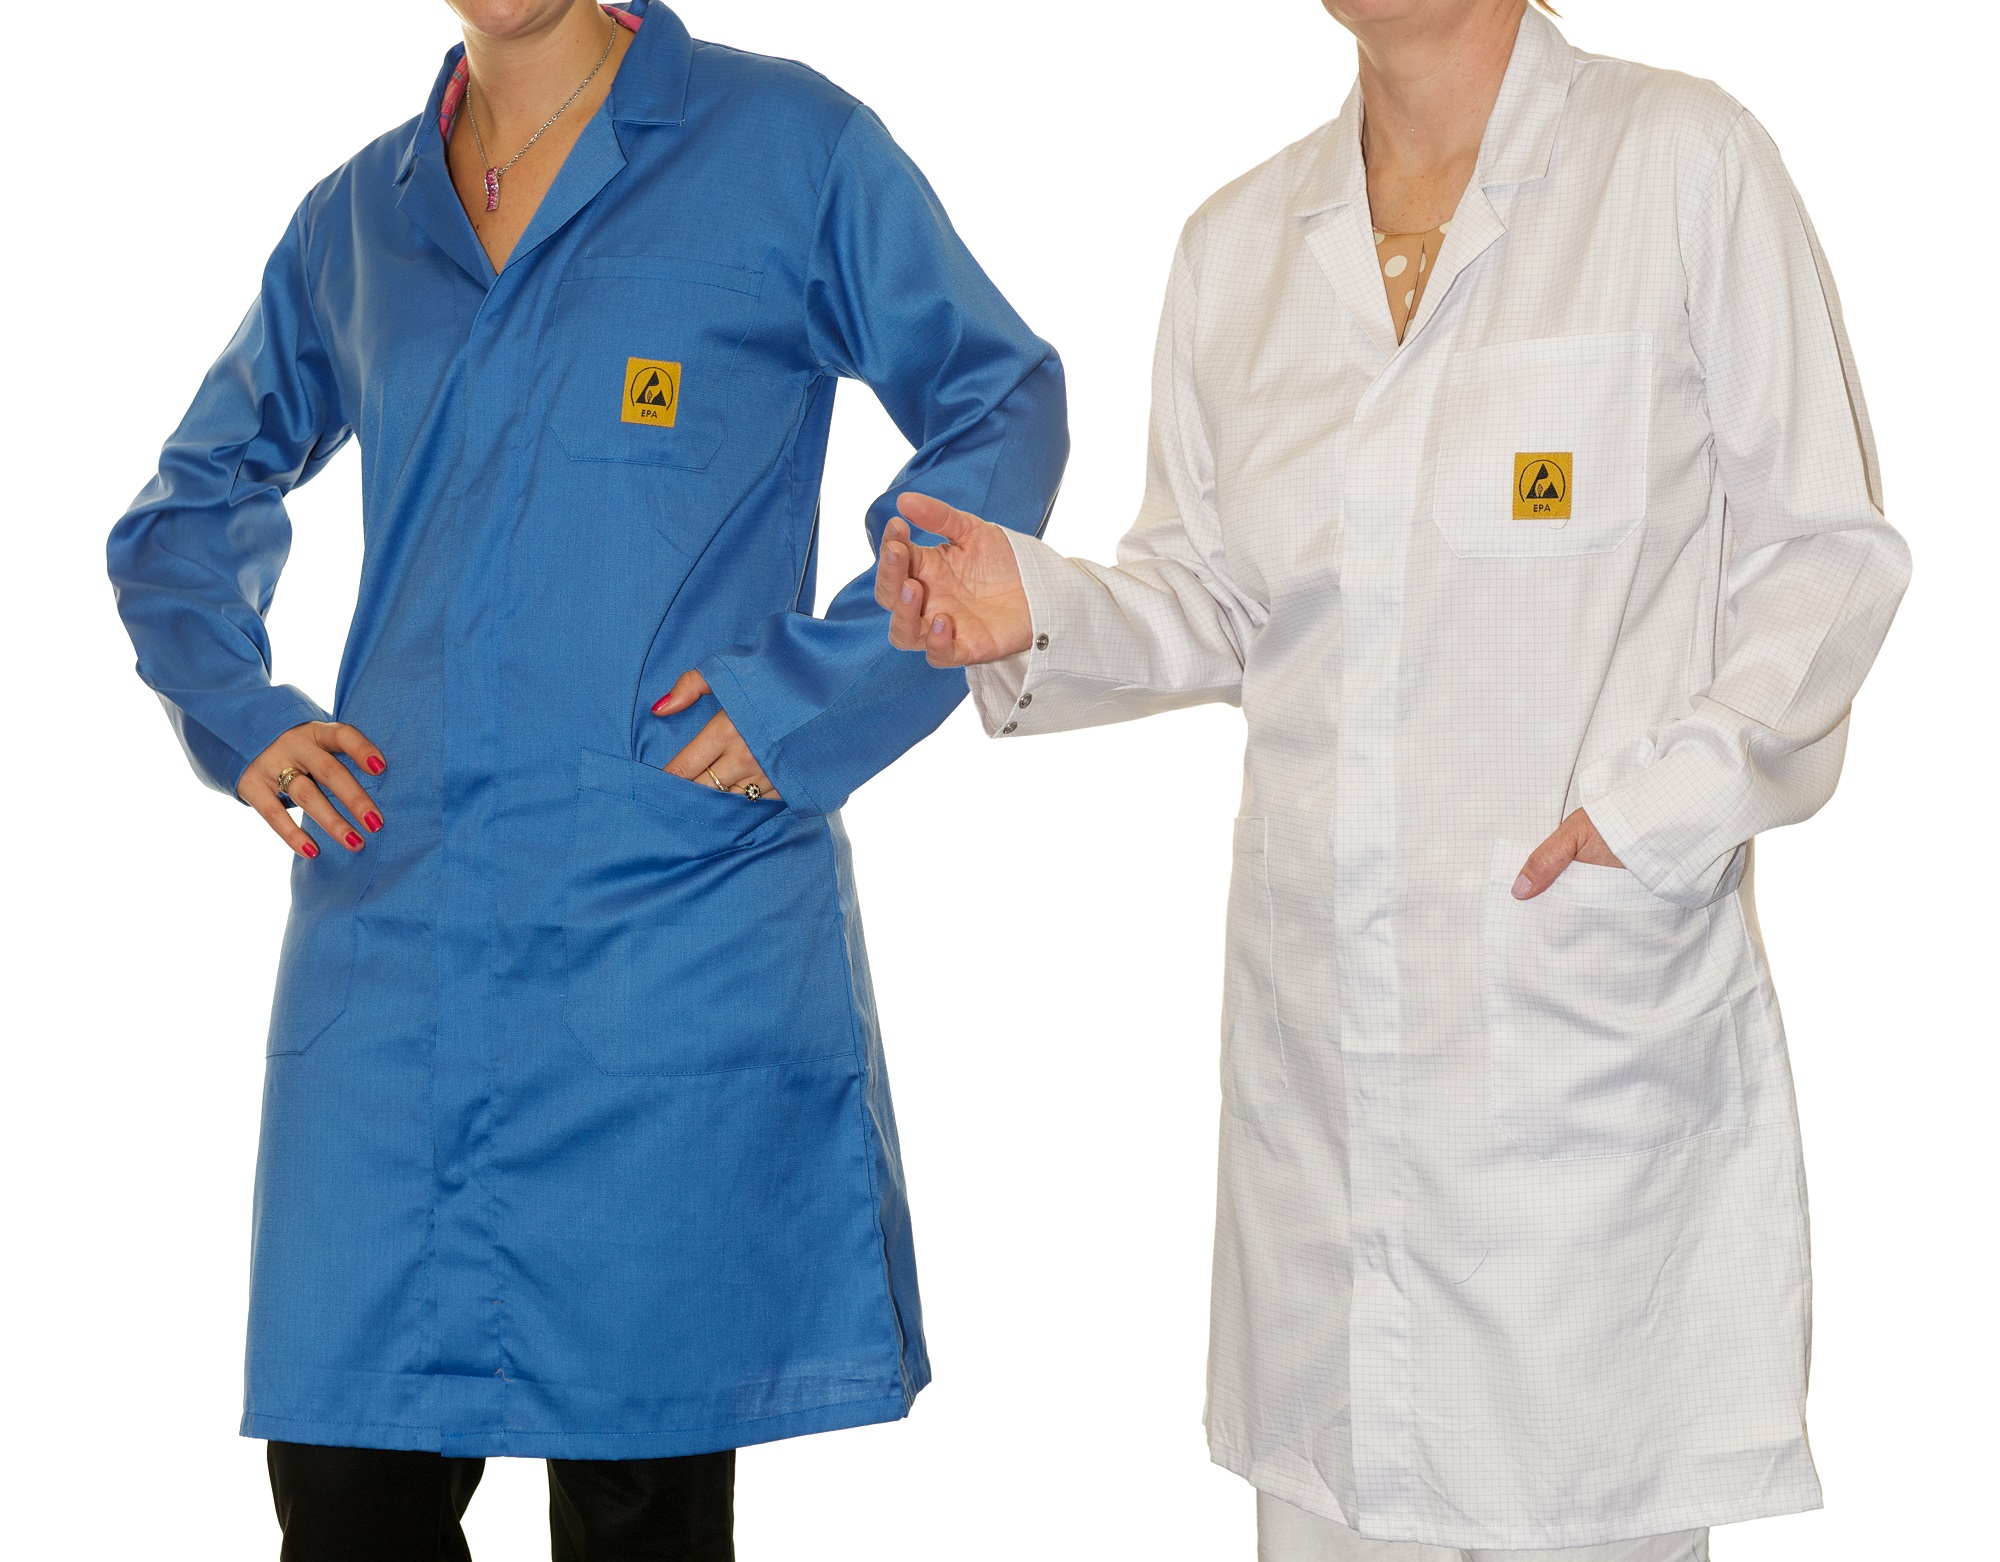 Bondline anti-static lab coats.